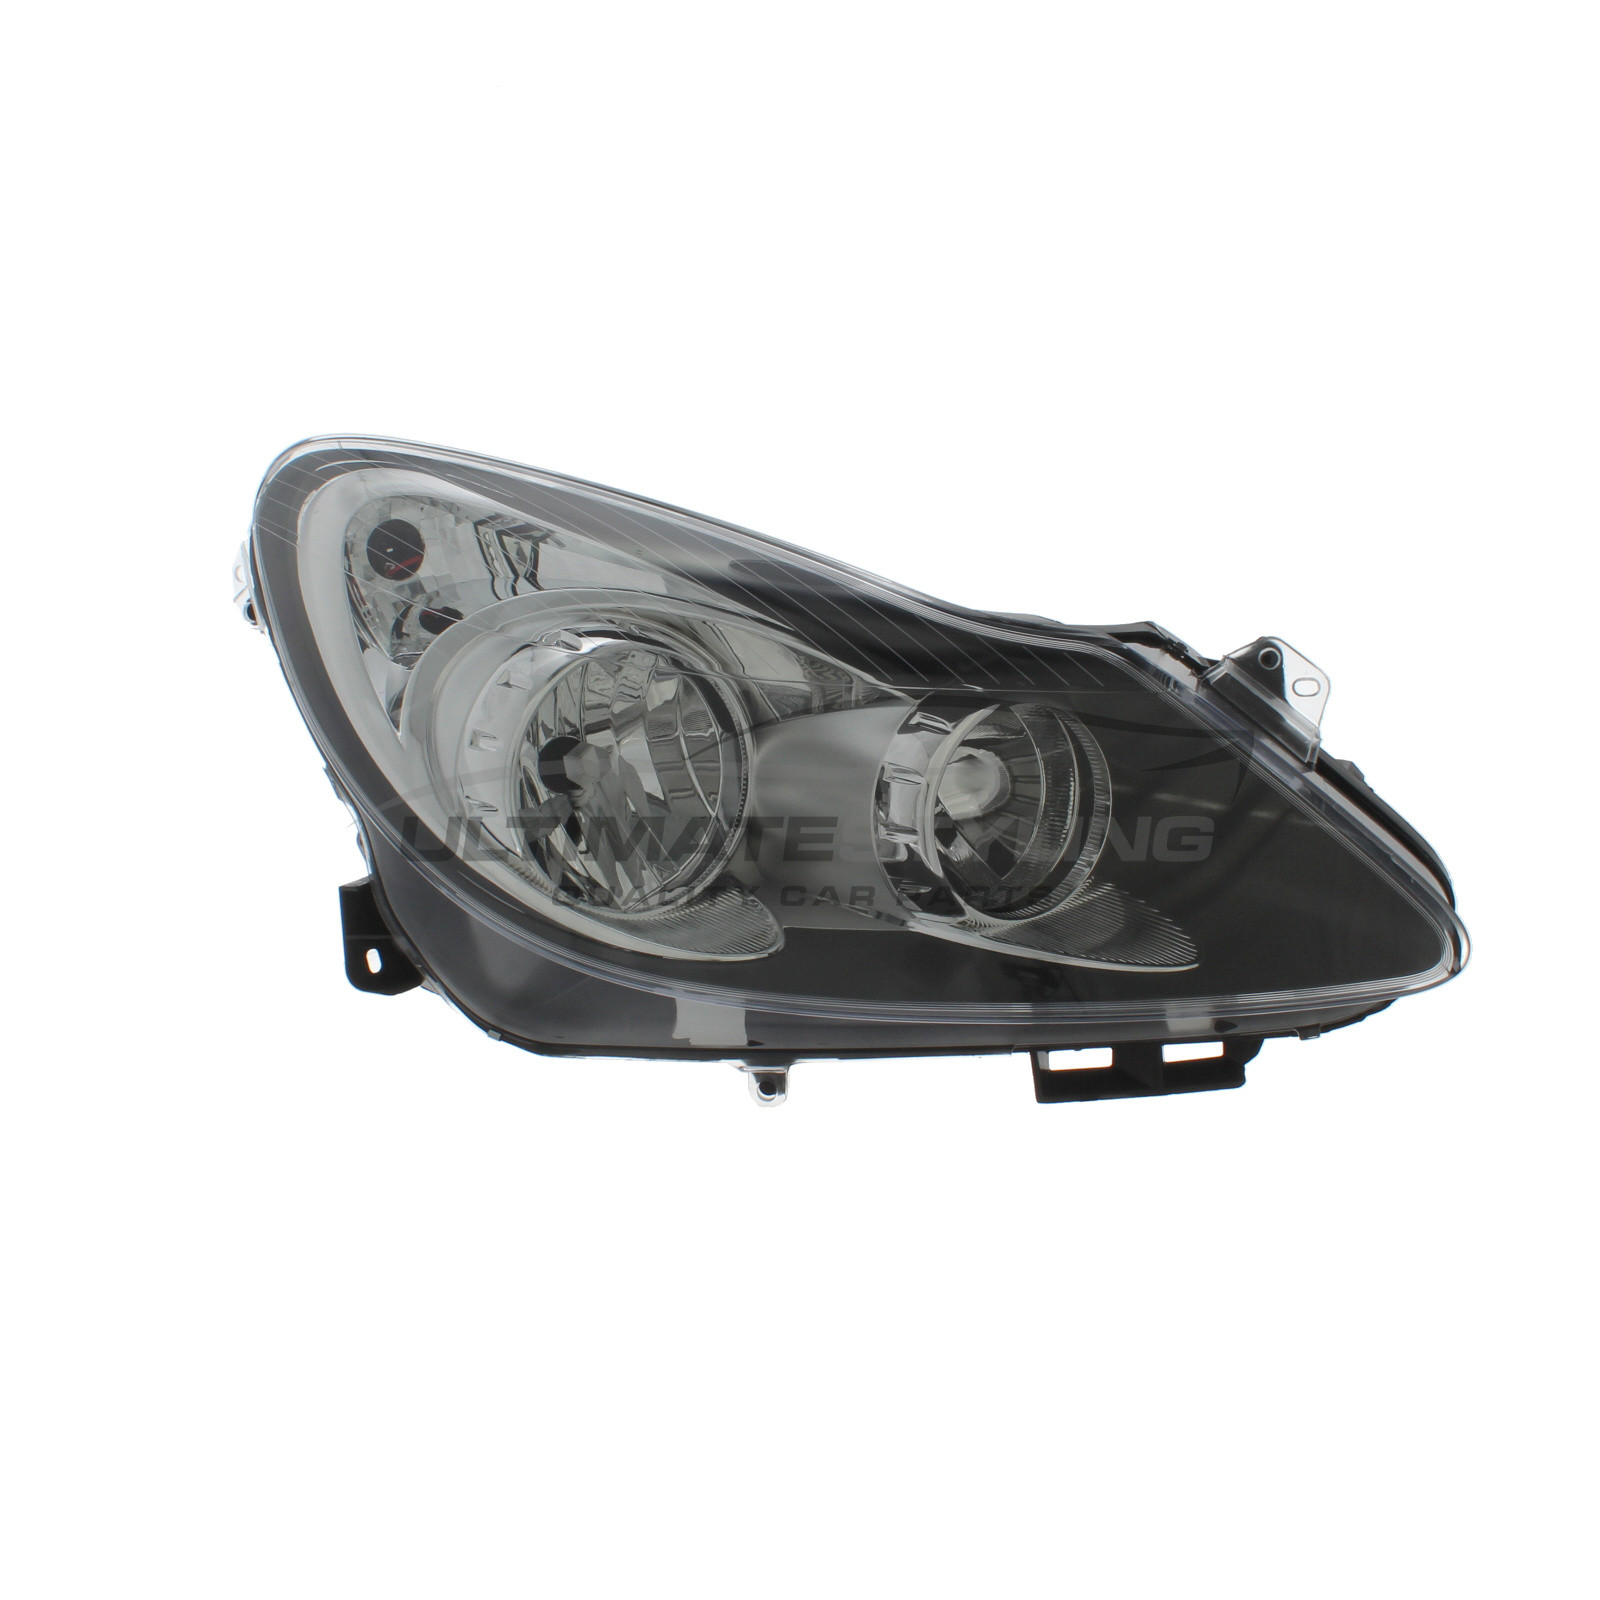 Vauxhall Corsa Headlight / Headlamp - Drivers Side (RH) - Halogen